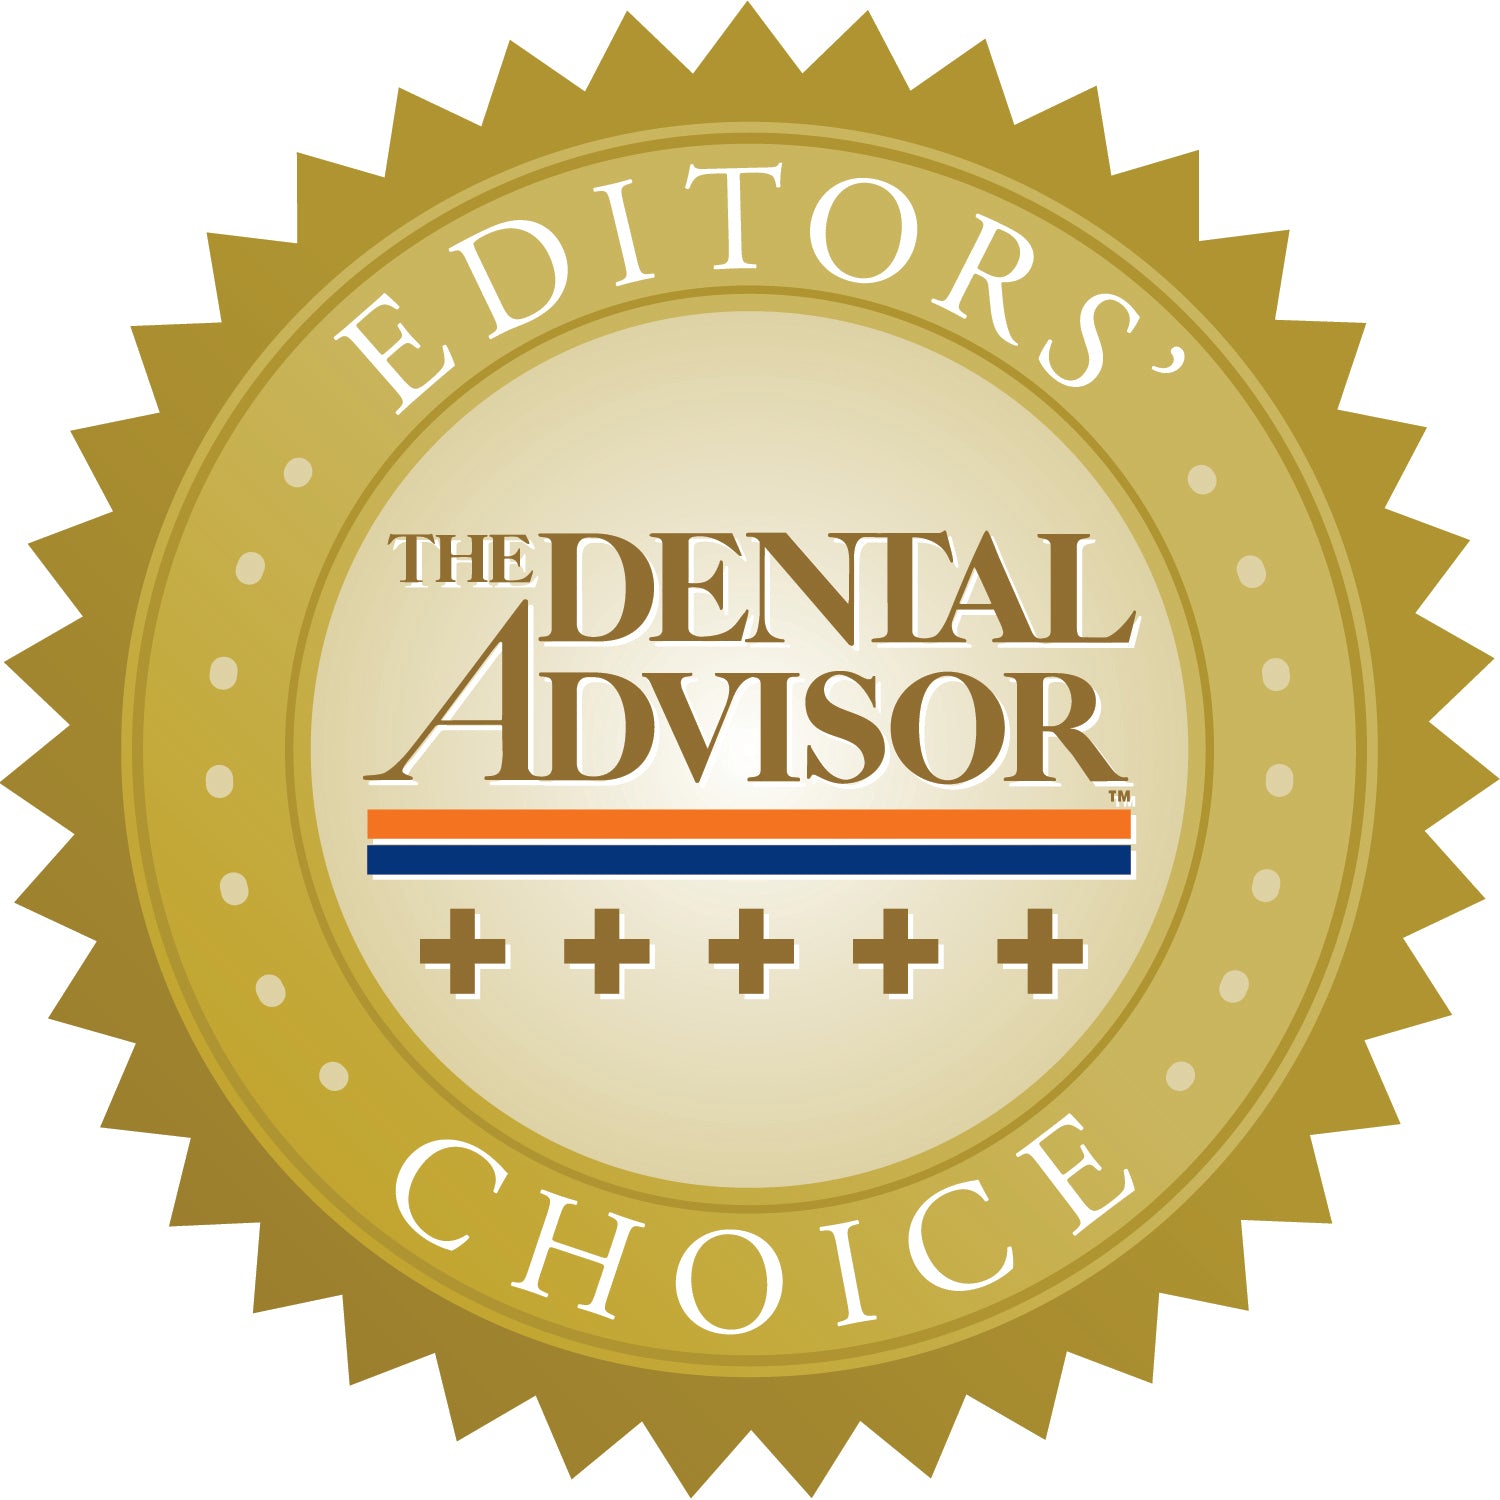 The Dental Advisor Awards StellaLife the Editors' Choice Image